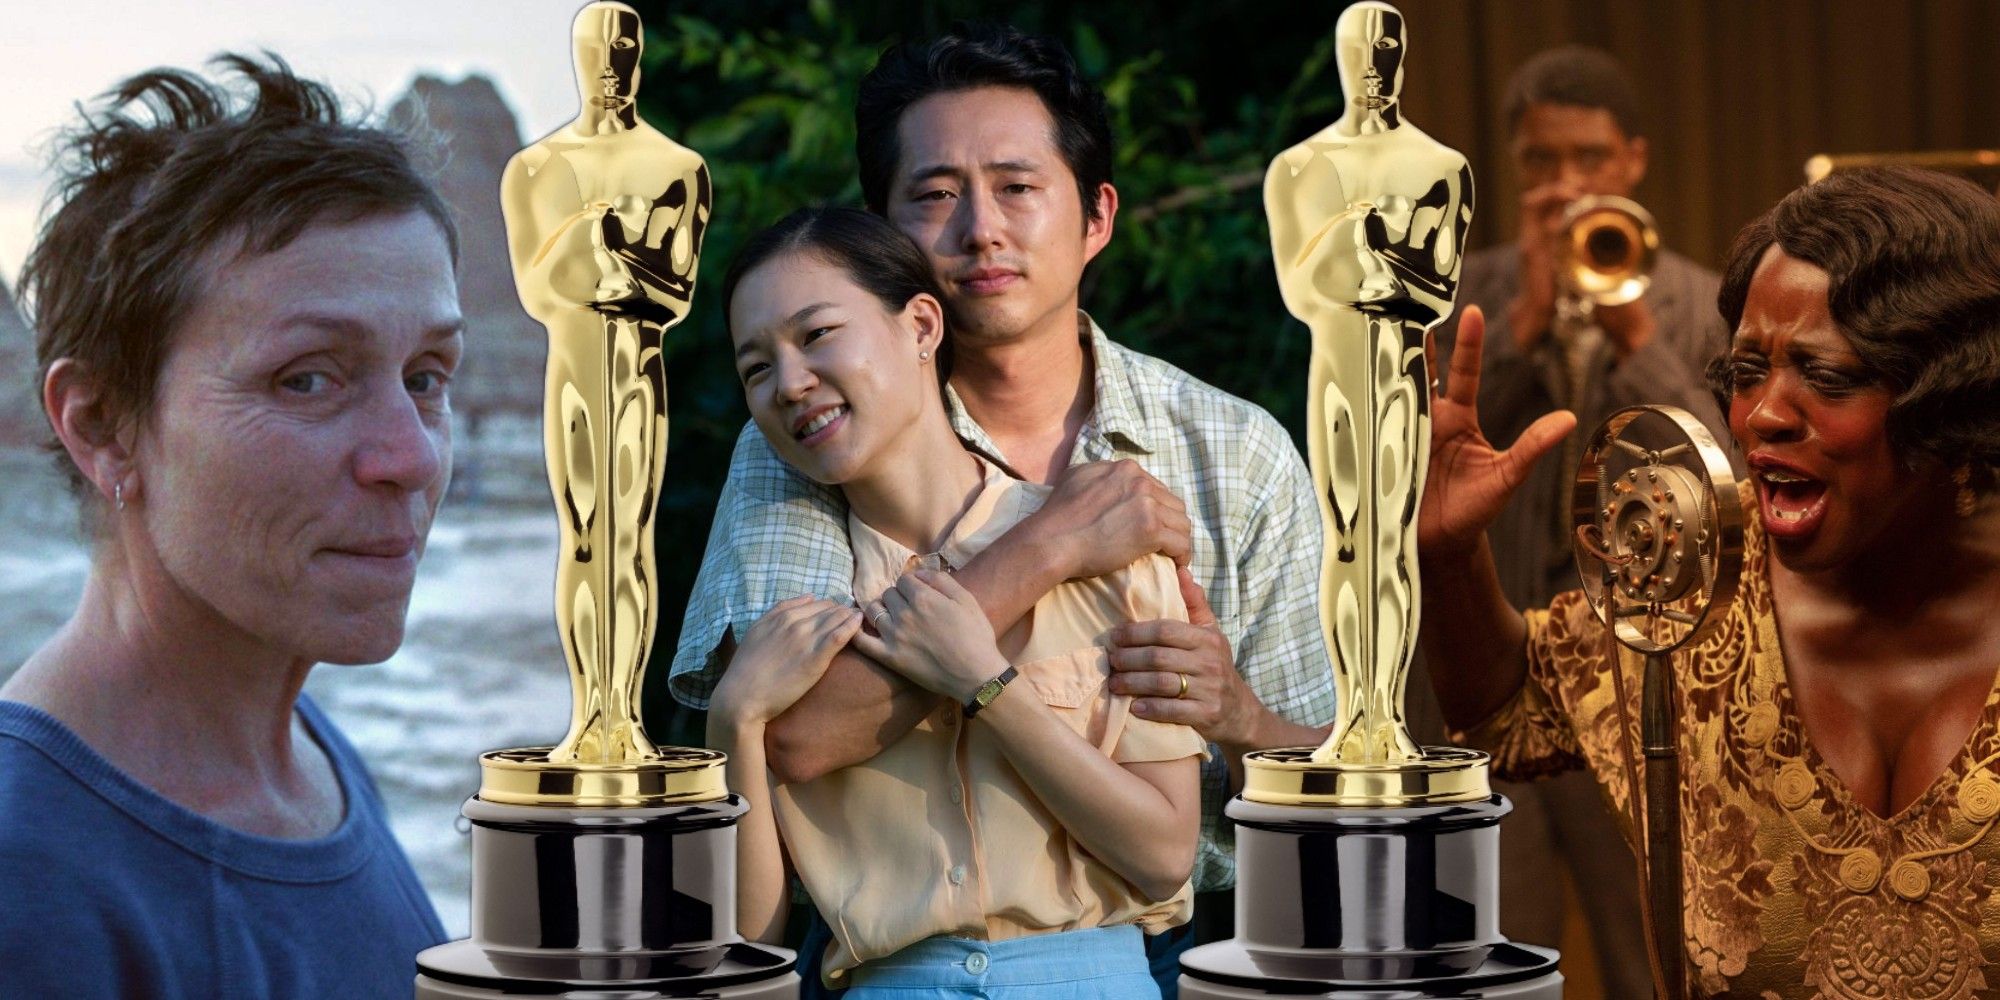 2021 Oscar Winners List - GoldDerby